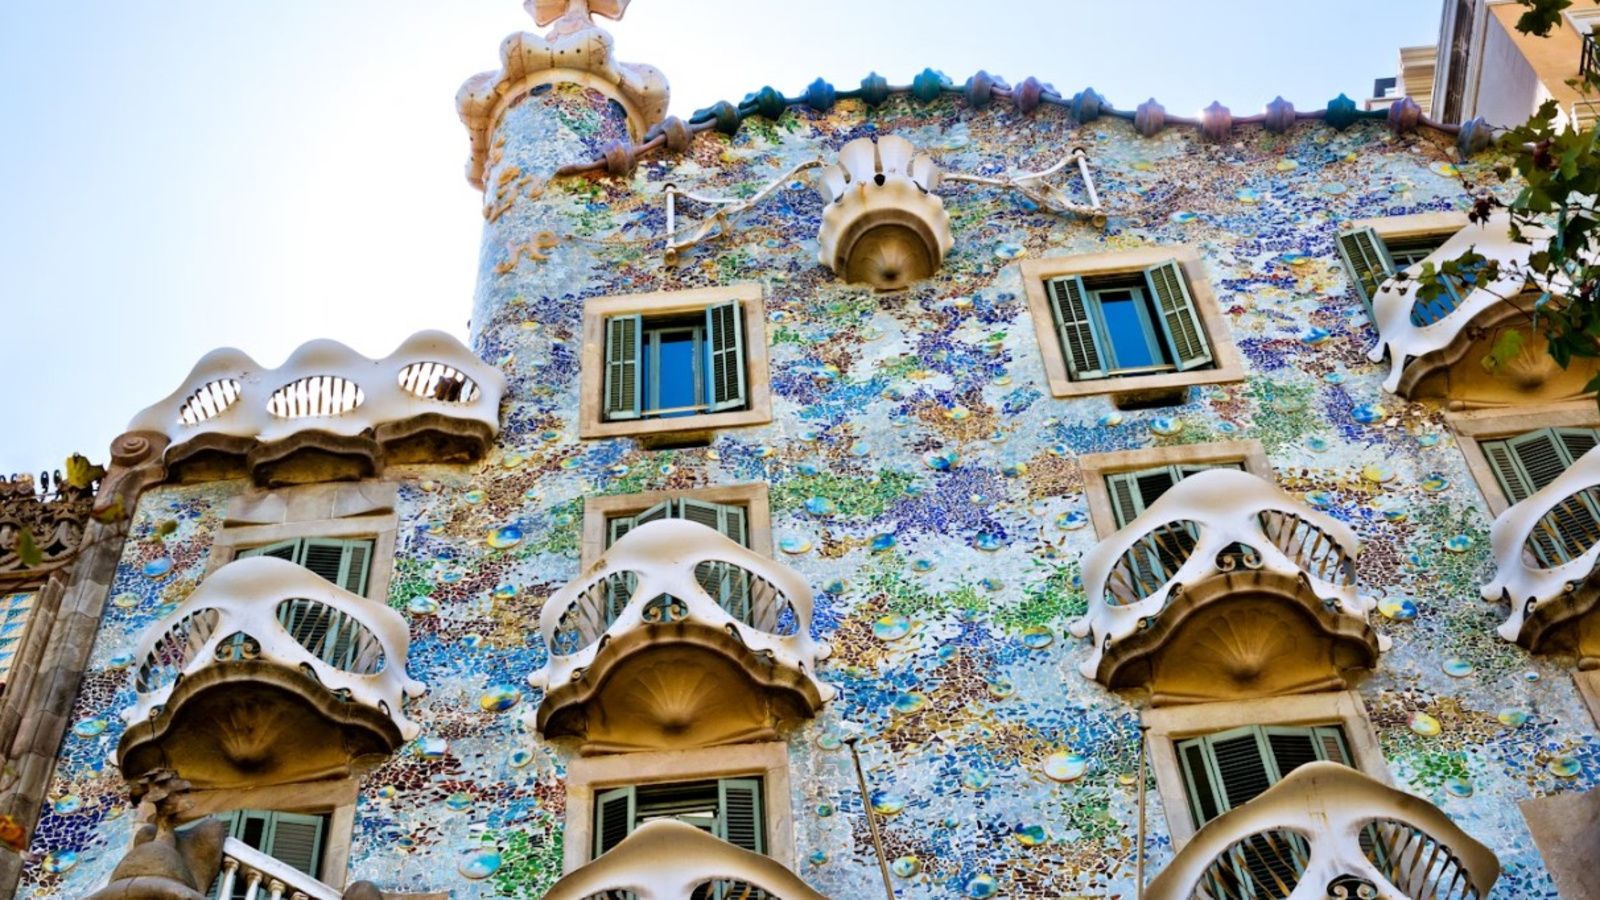 Casa Batlló à Barcelone